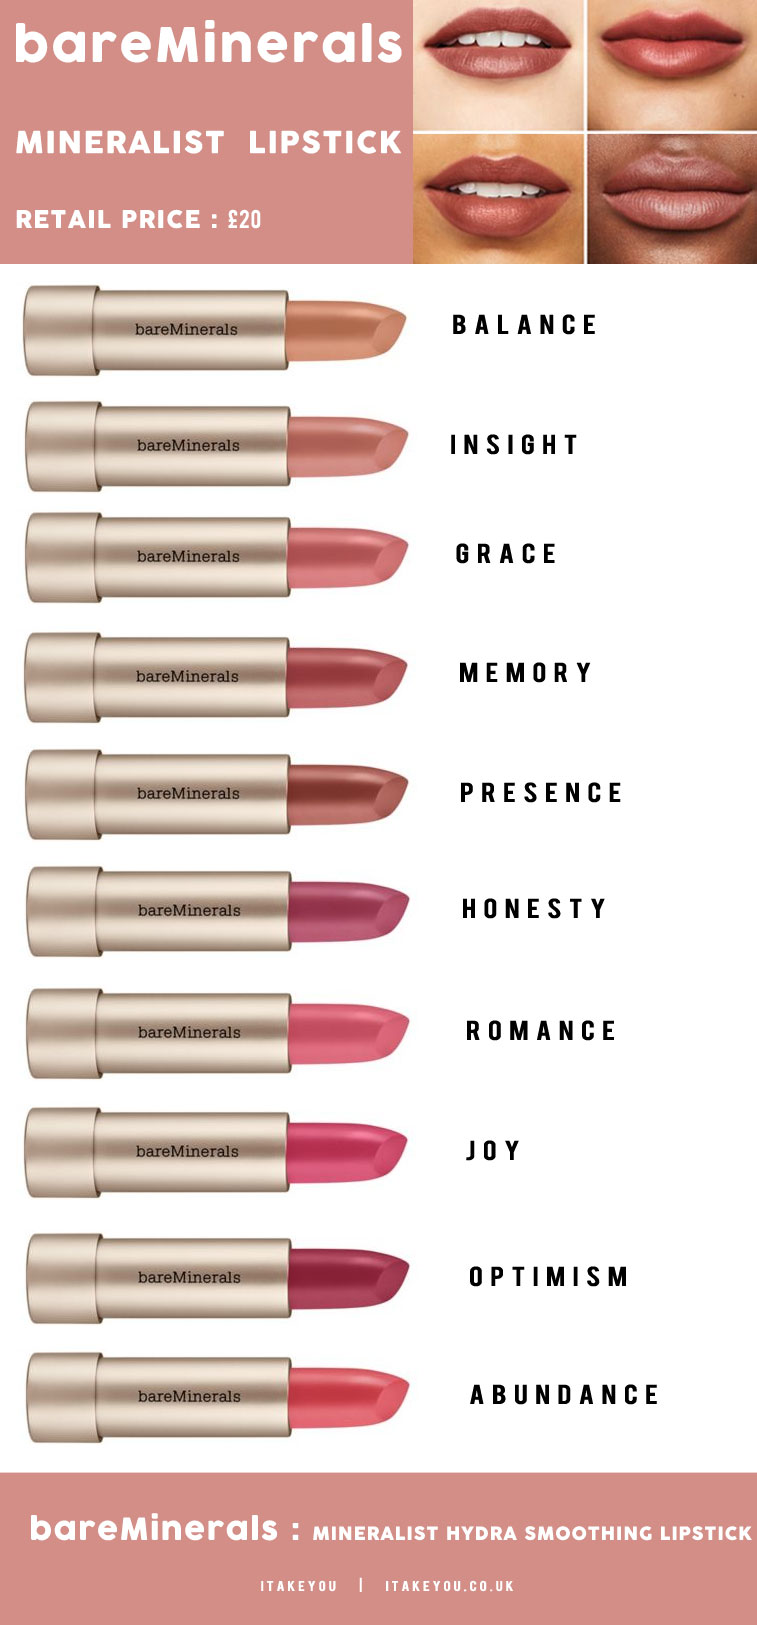 bareminerals lipstick, vegan lipstick, vegan lipsticks, bareminerals mineralist lipstick, bareminerals lipstick swatches, bareminerals lipstick set, bareminerals lipsticks ,bareminerals lipstick barepro, bareminerals lipstick mantra, bare minerals 